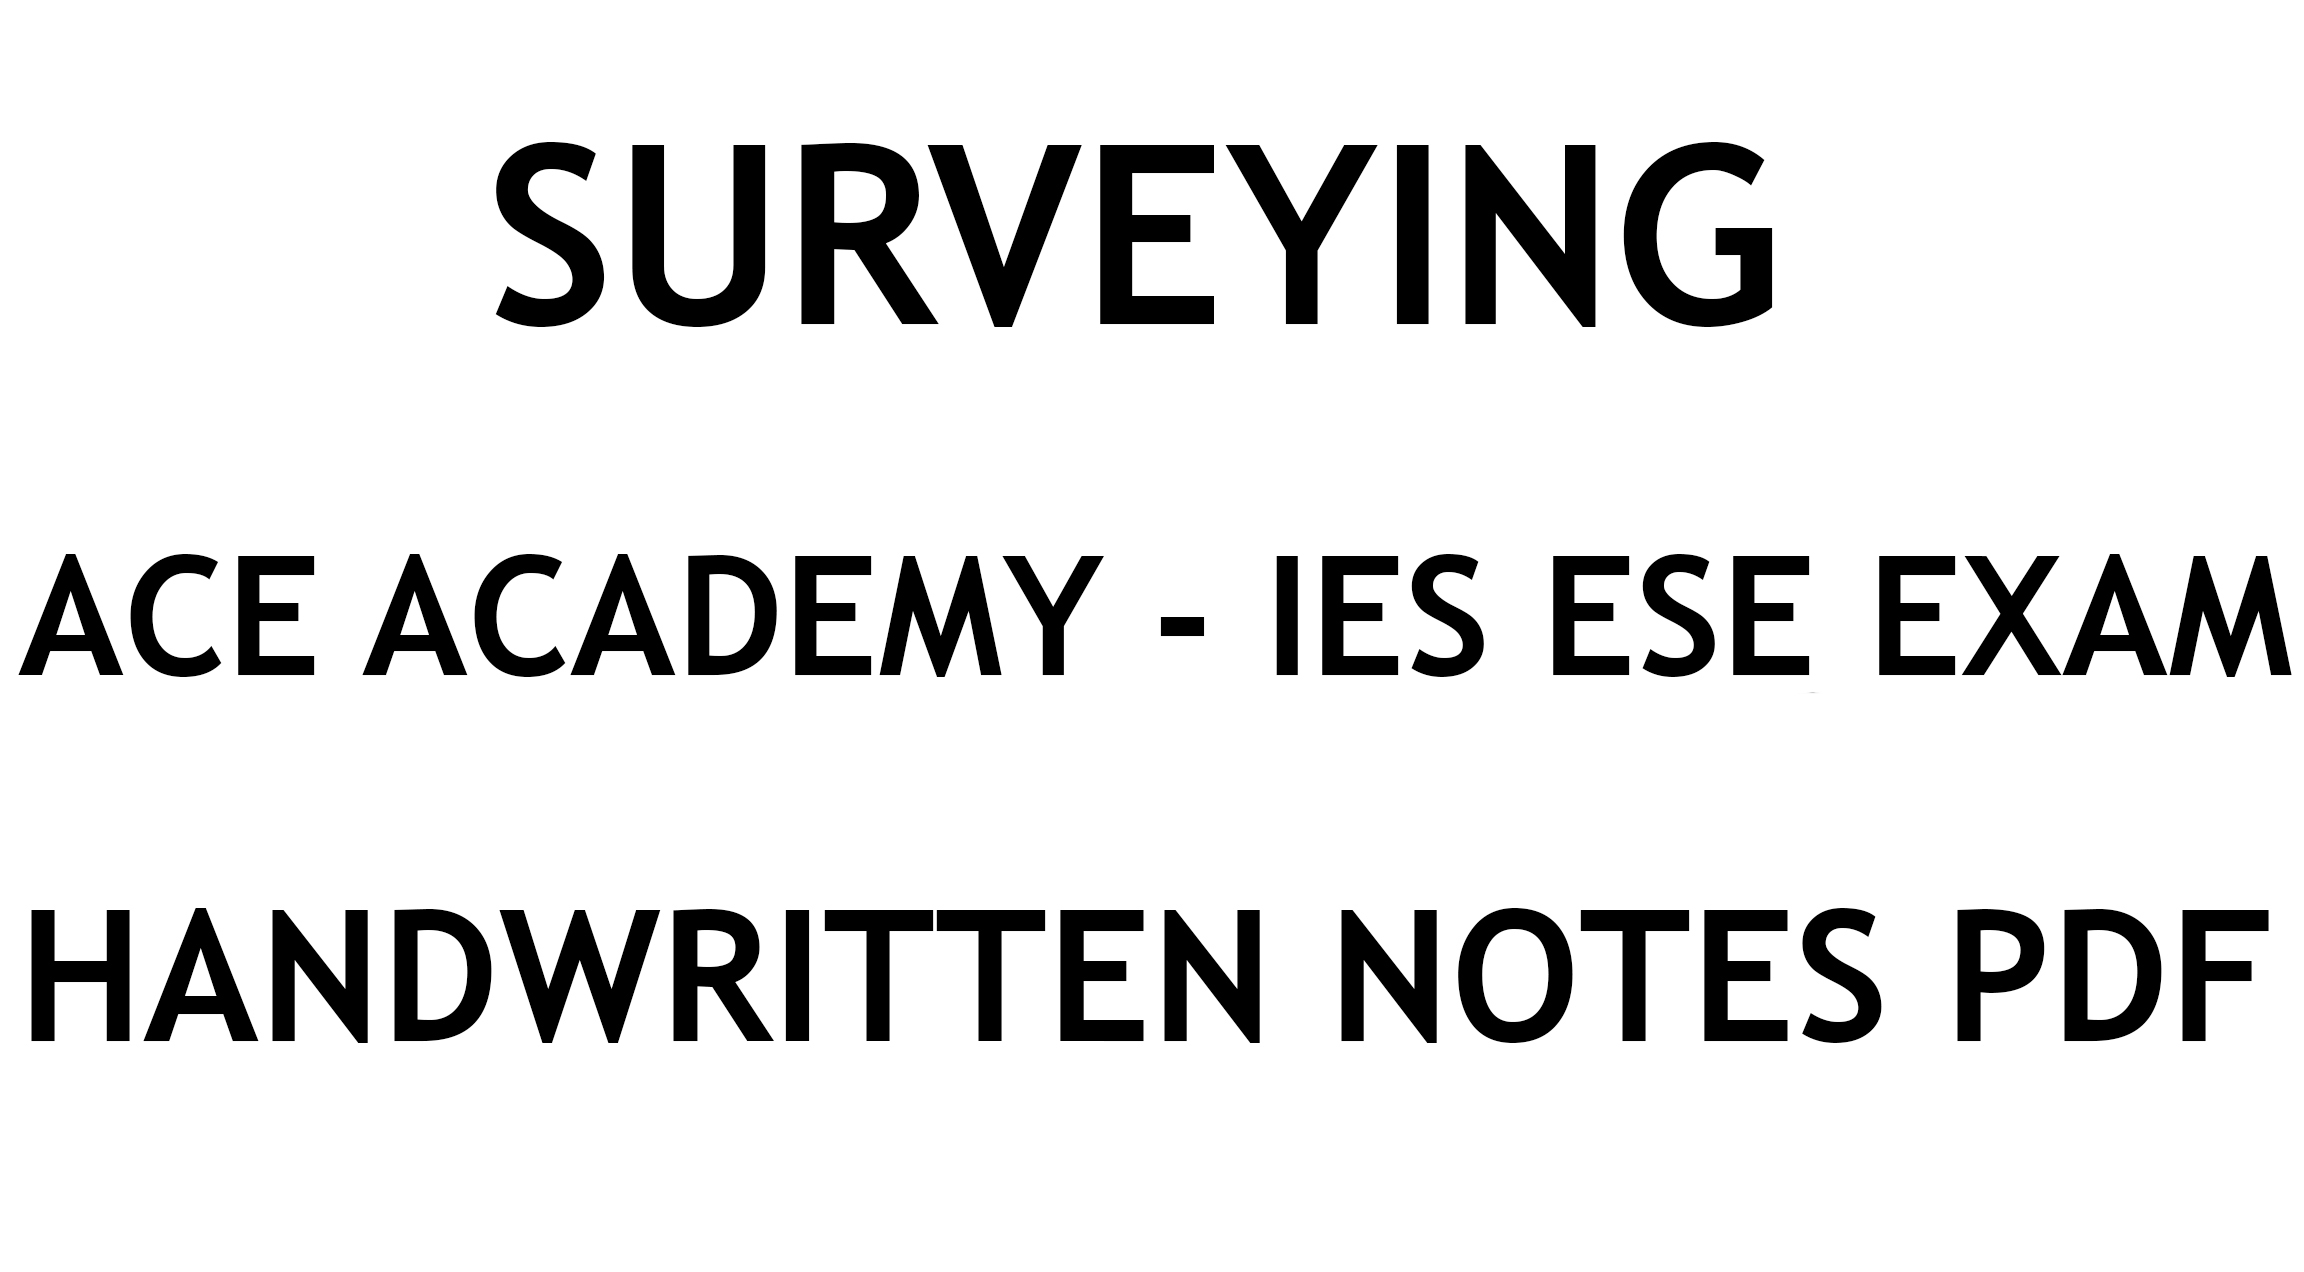 Surveying IES ESE Exam Ace Academy Handwritten Classroom Notes PDF